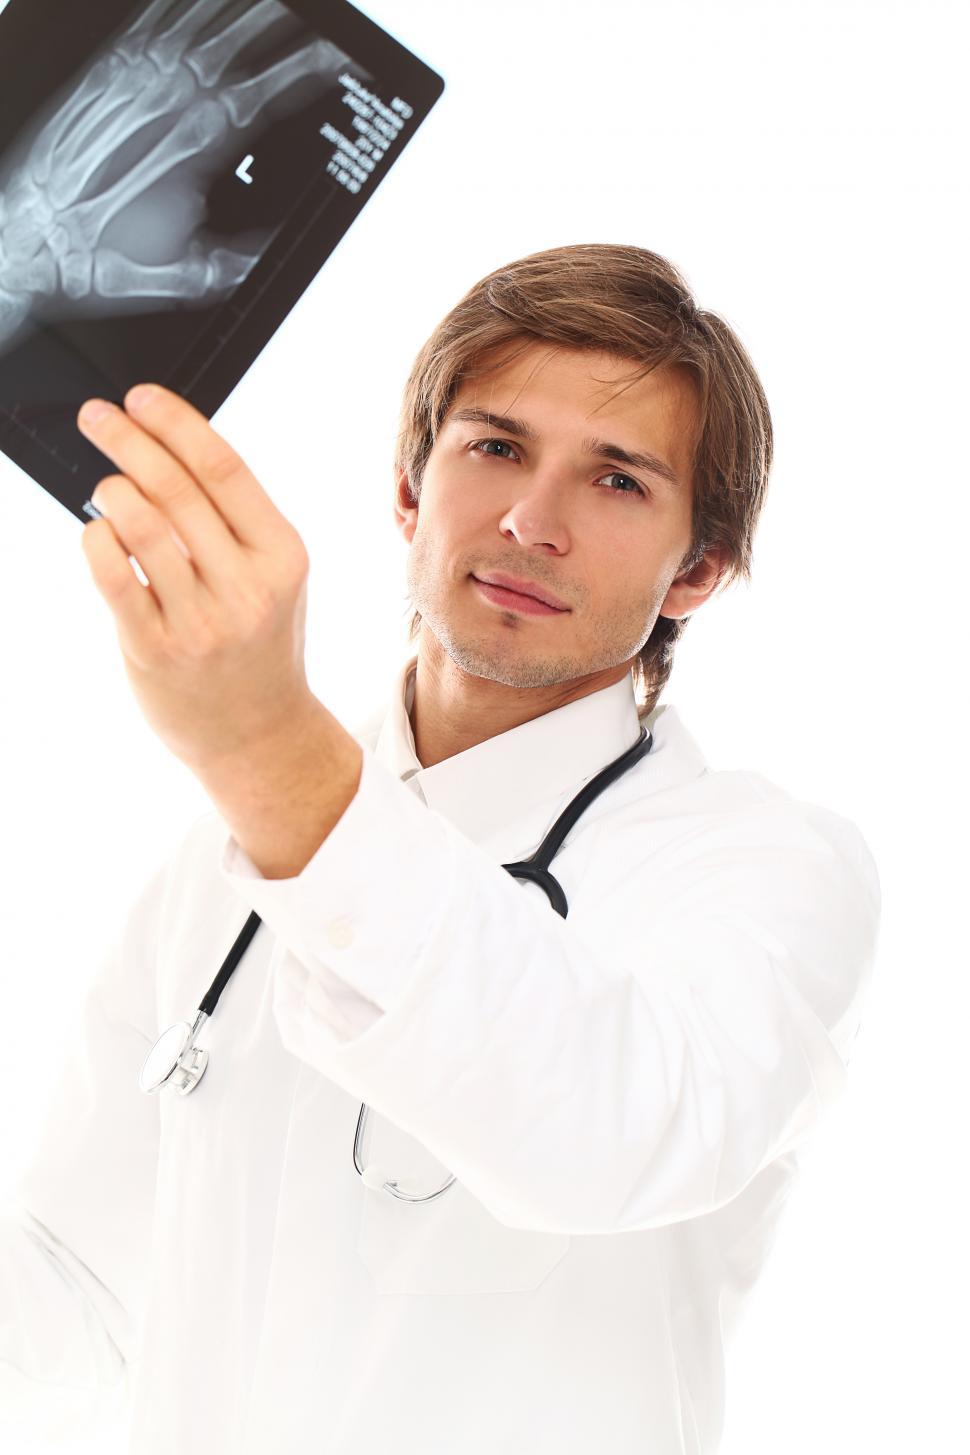 Free Image of Medical provider looking at an x-ray 